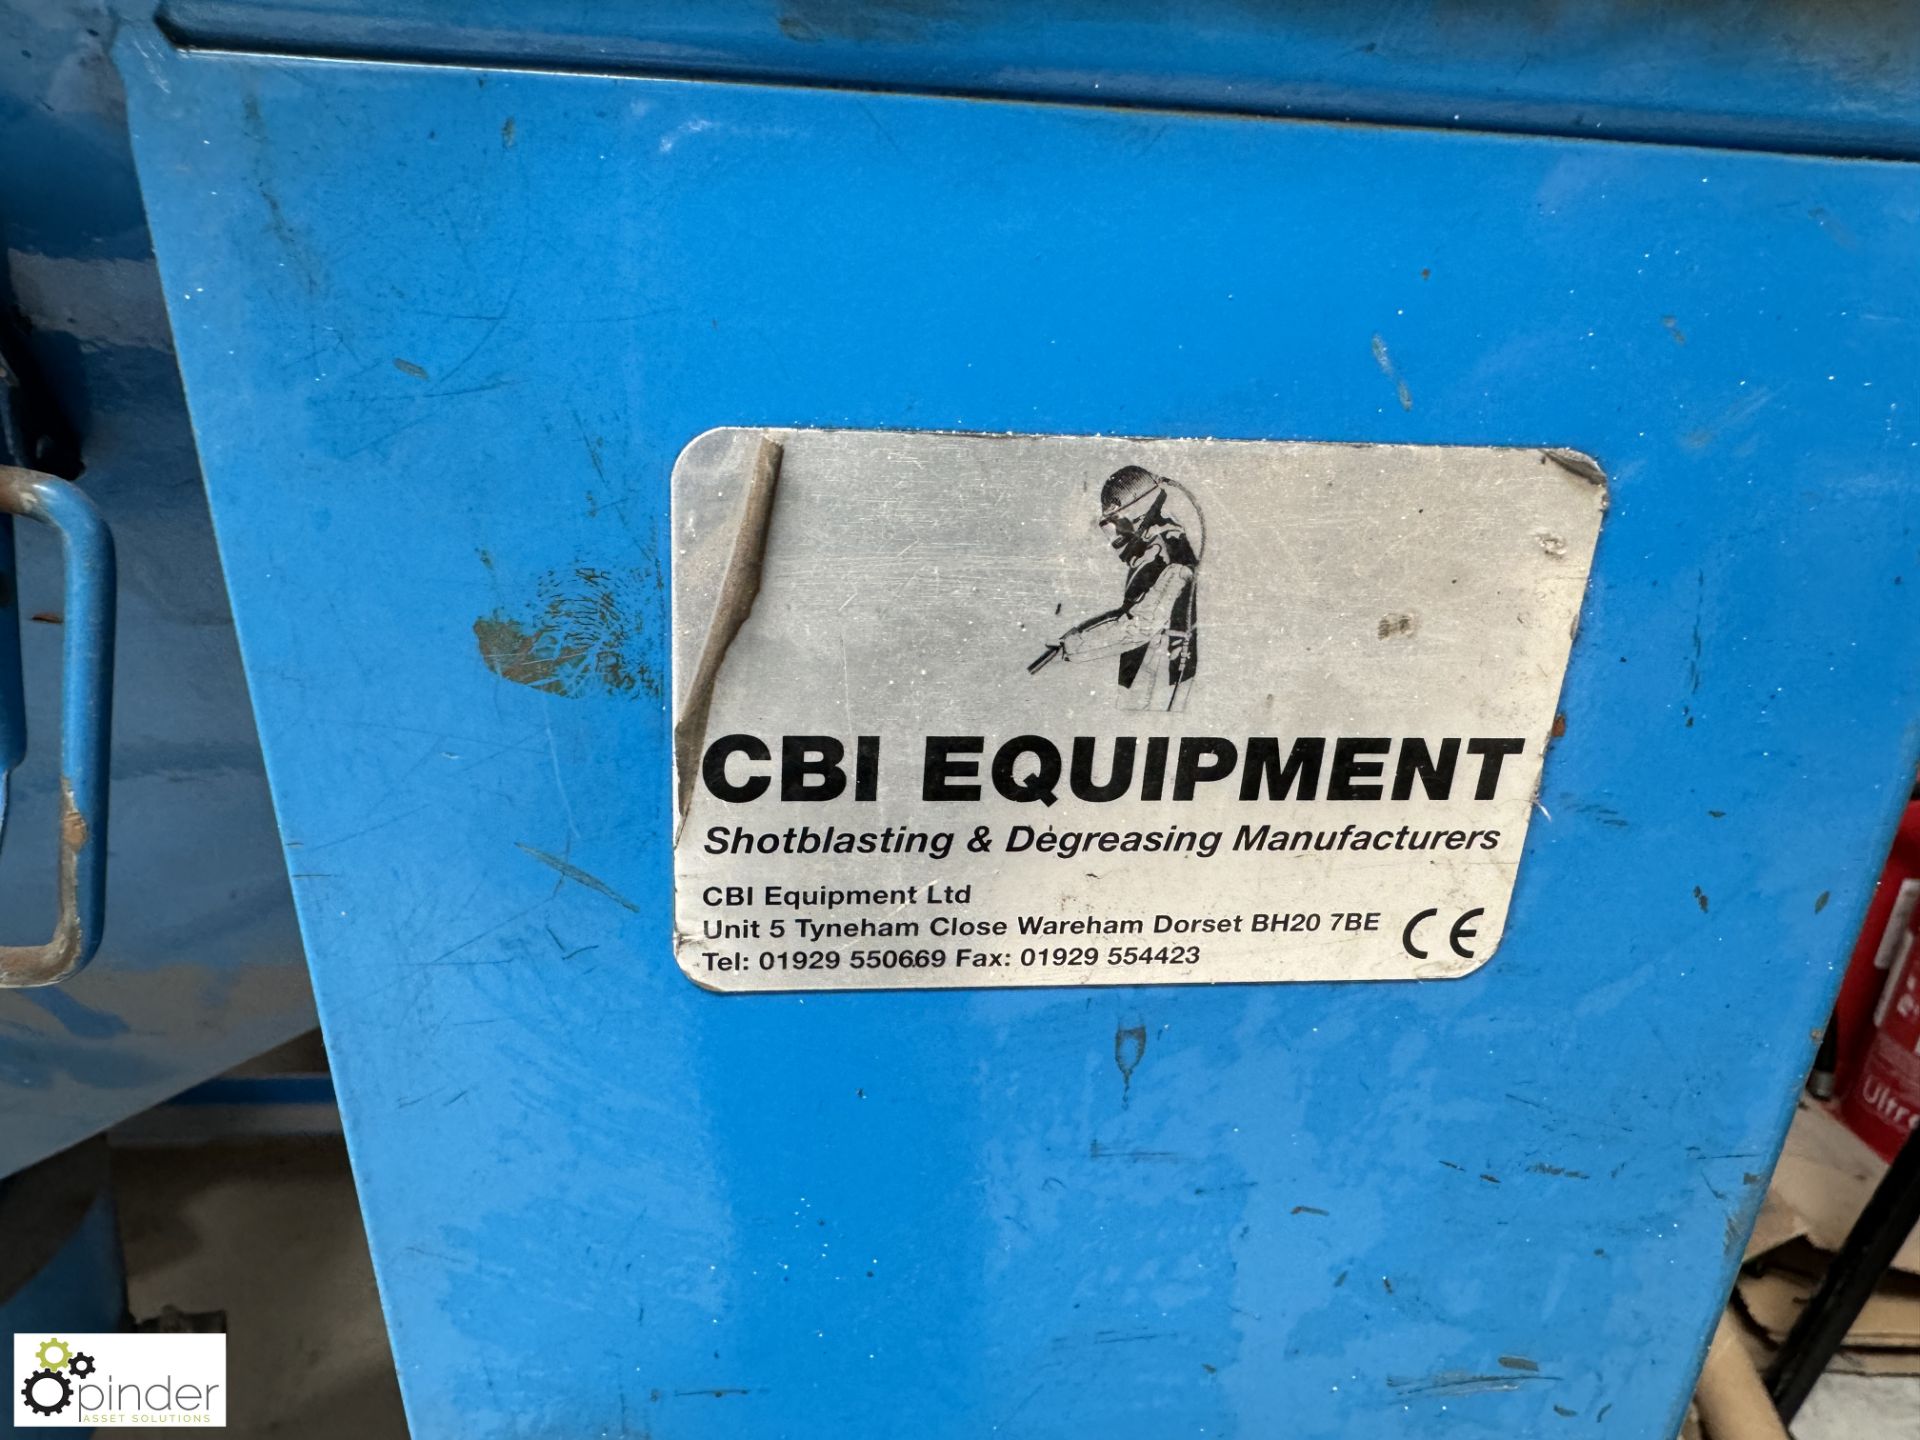 CBI Shot Blast Cabinet, 1240mm x 950mm x 900mm, 1100mm x 700mm x 280mm bike frame section - Image 5 of 11